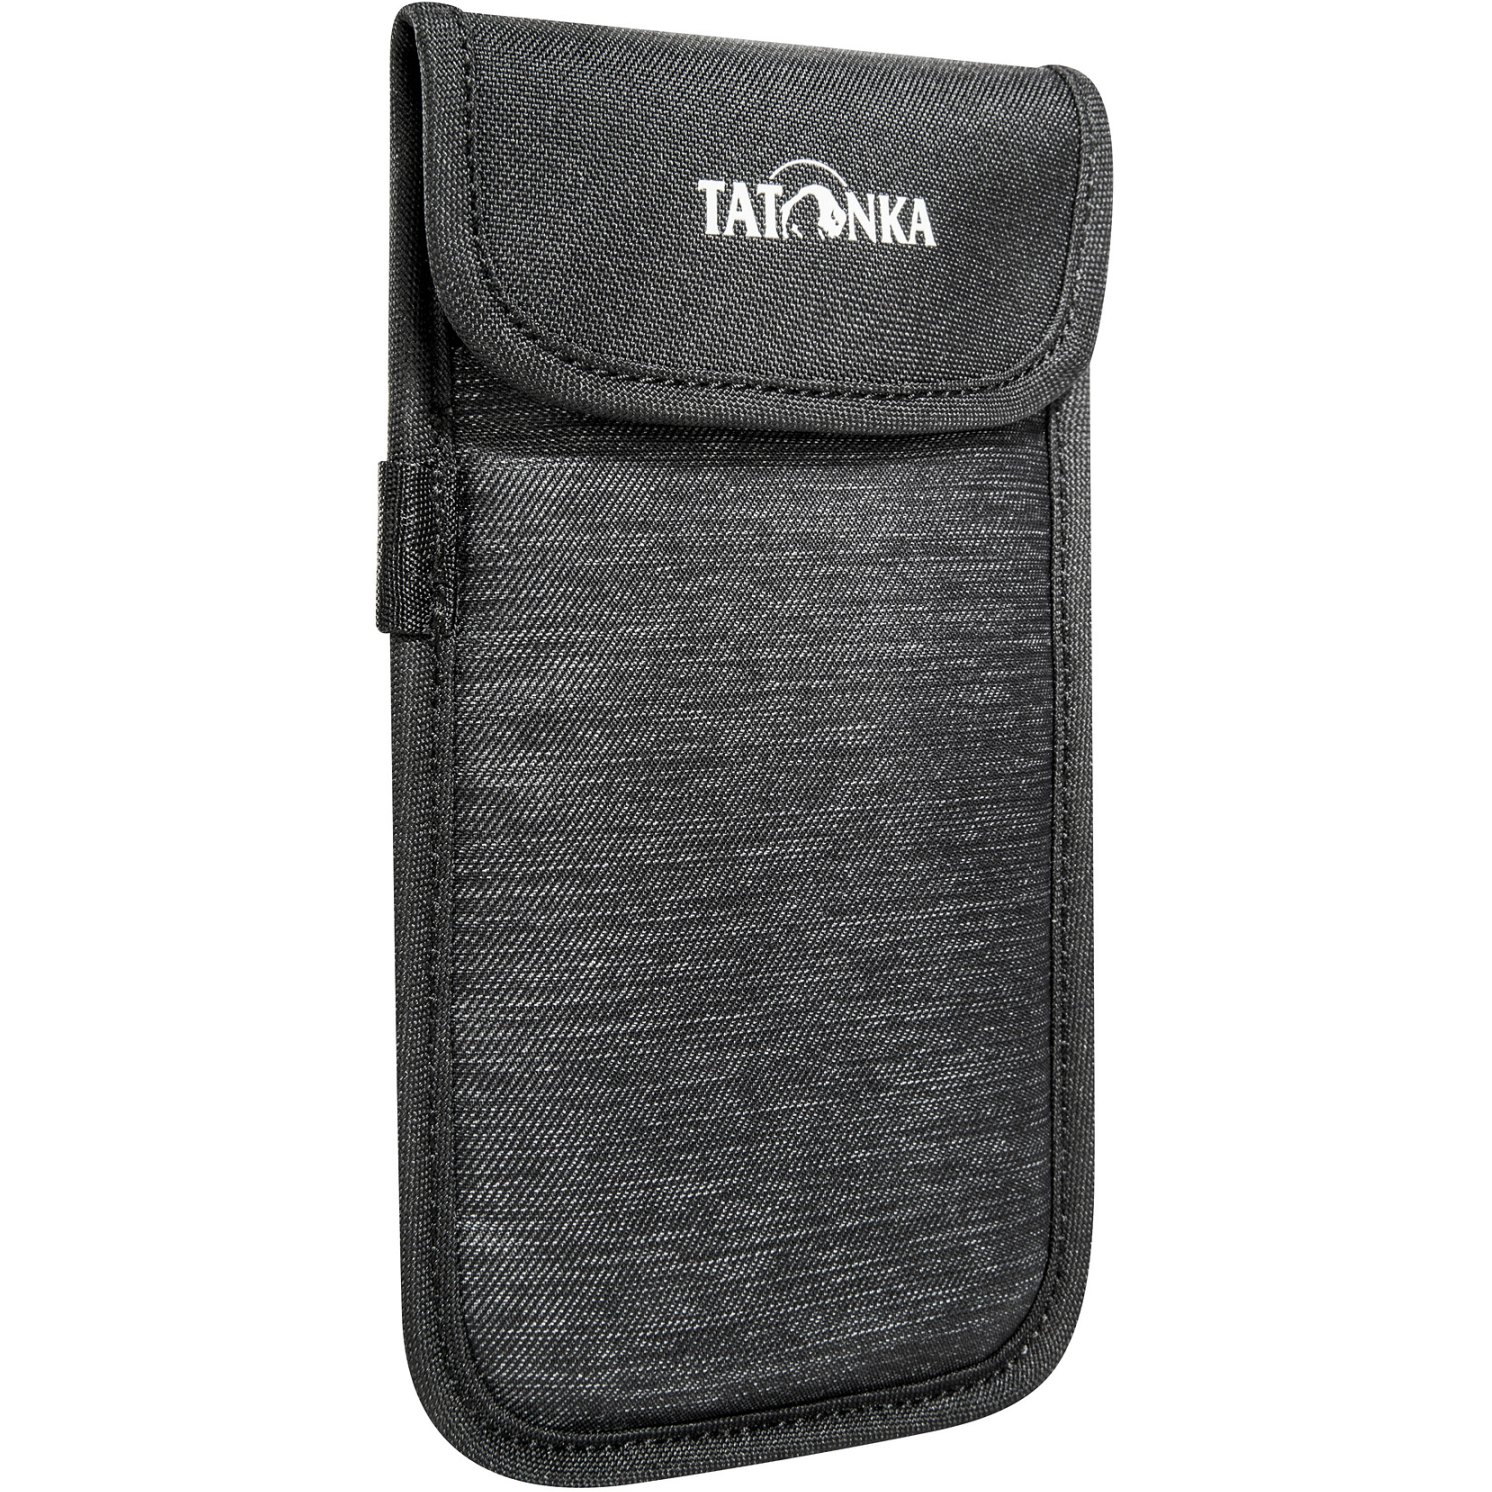 Productfoto van Tatonka Smartphone Case XXL - off black